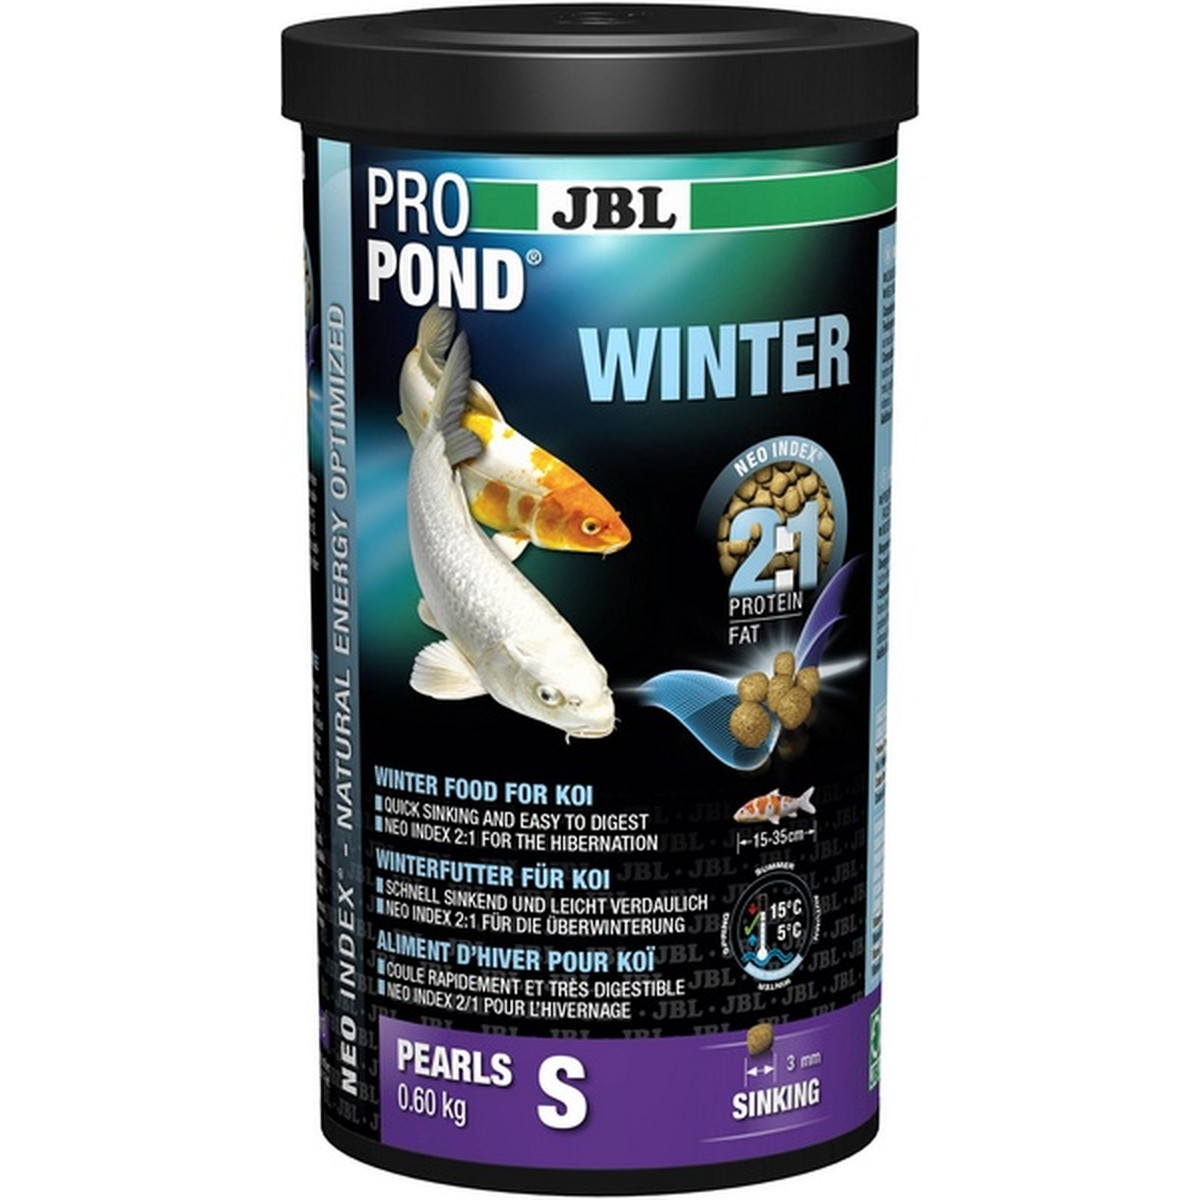   JBL ProPond Winter S, 600 g  600g